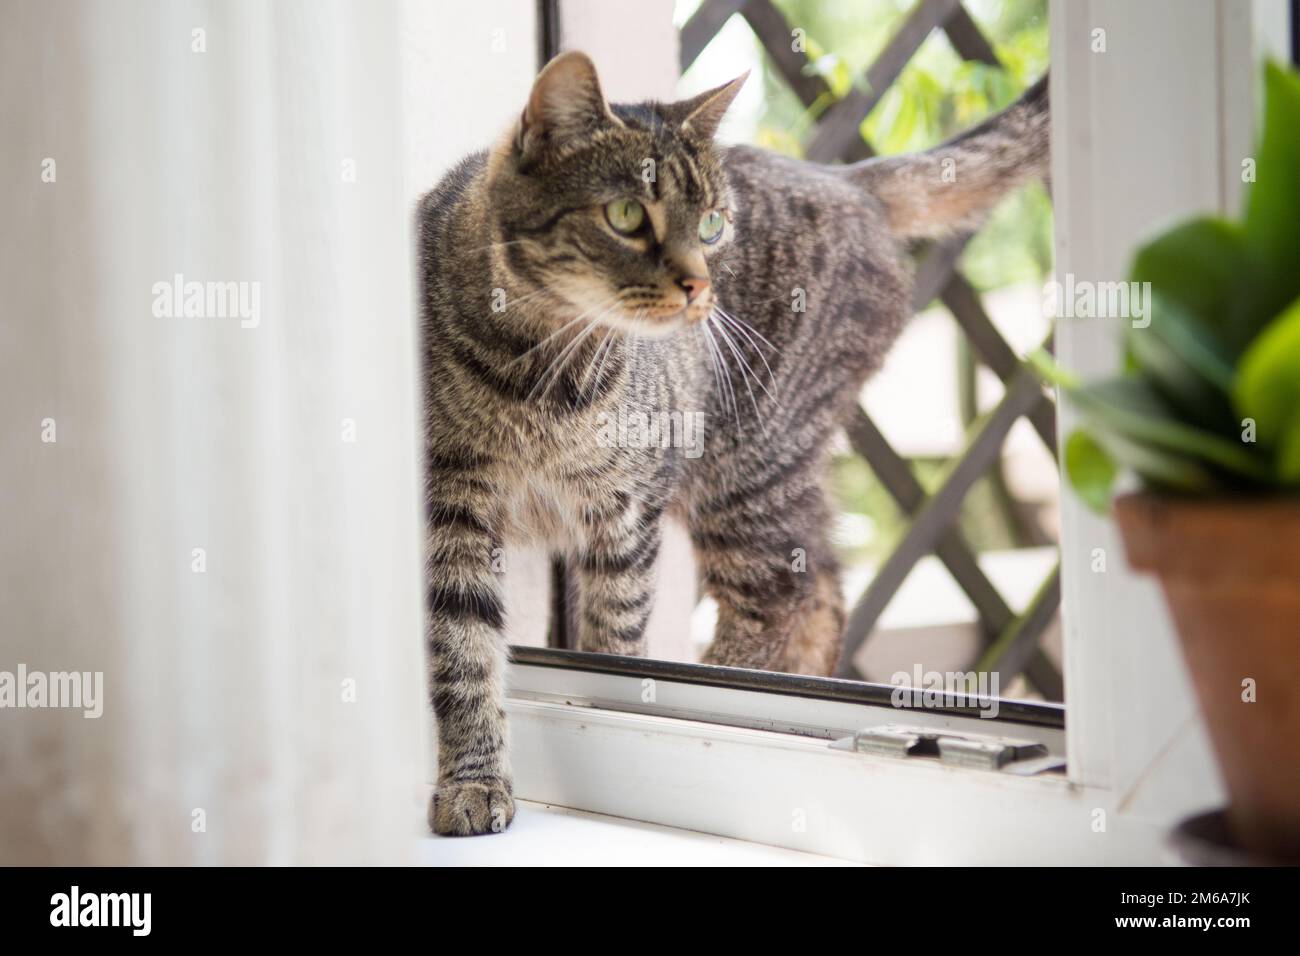 Beautiful striped grey cat walking into the room through an open window Stock Photo